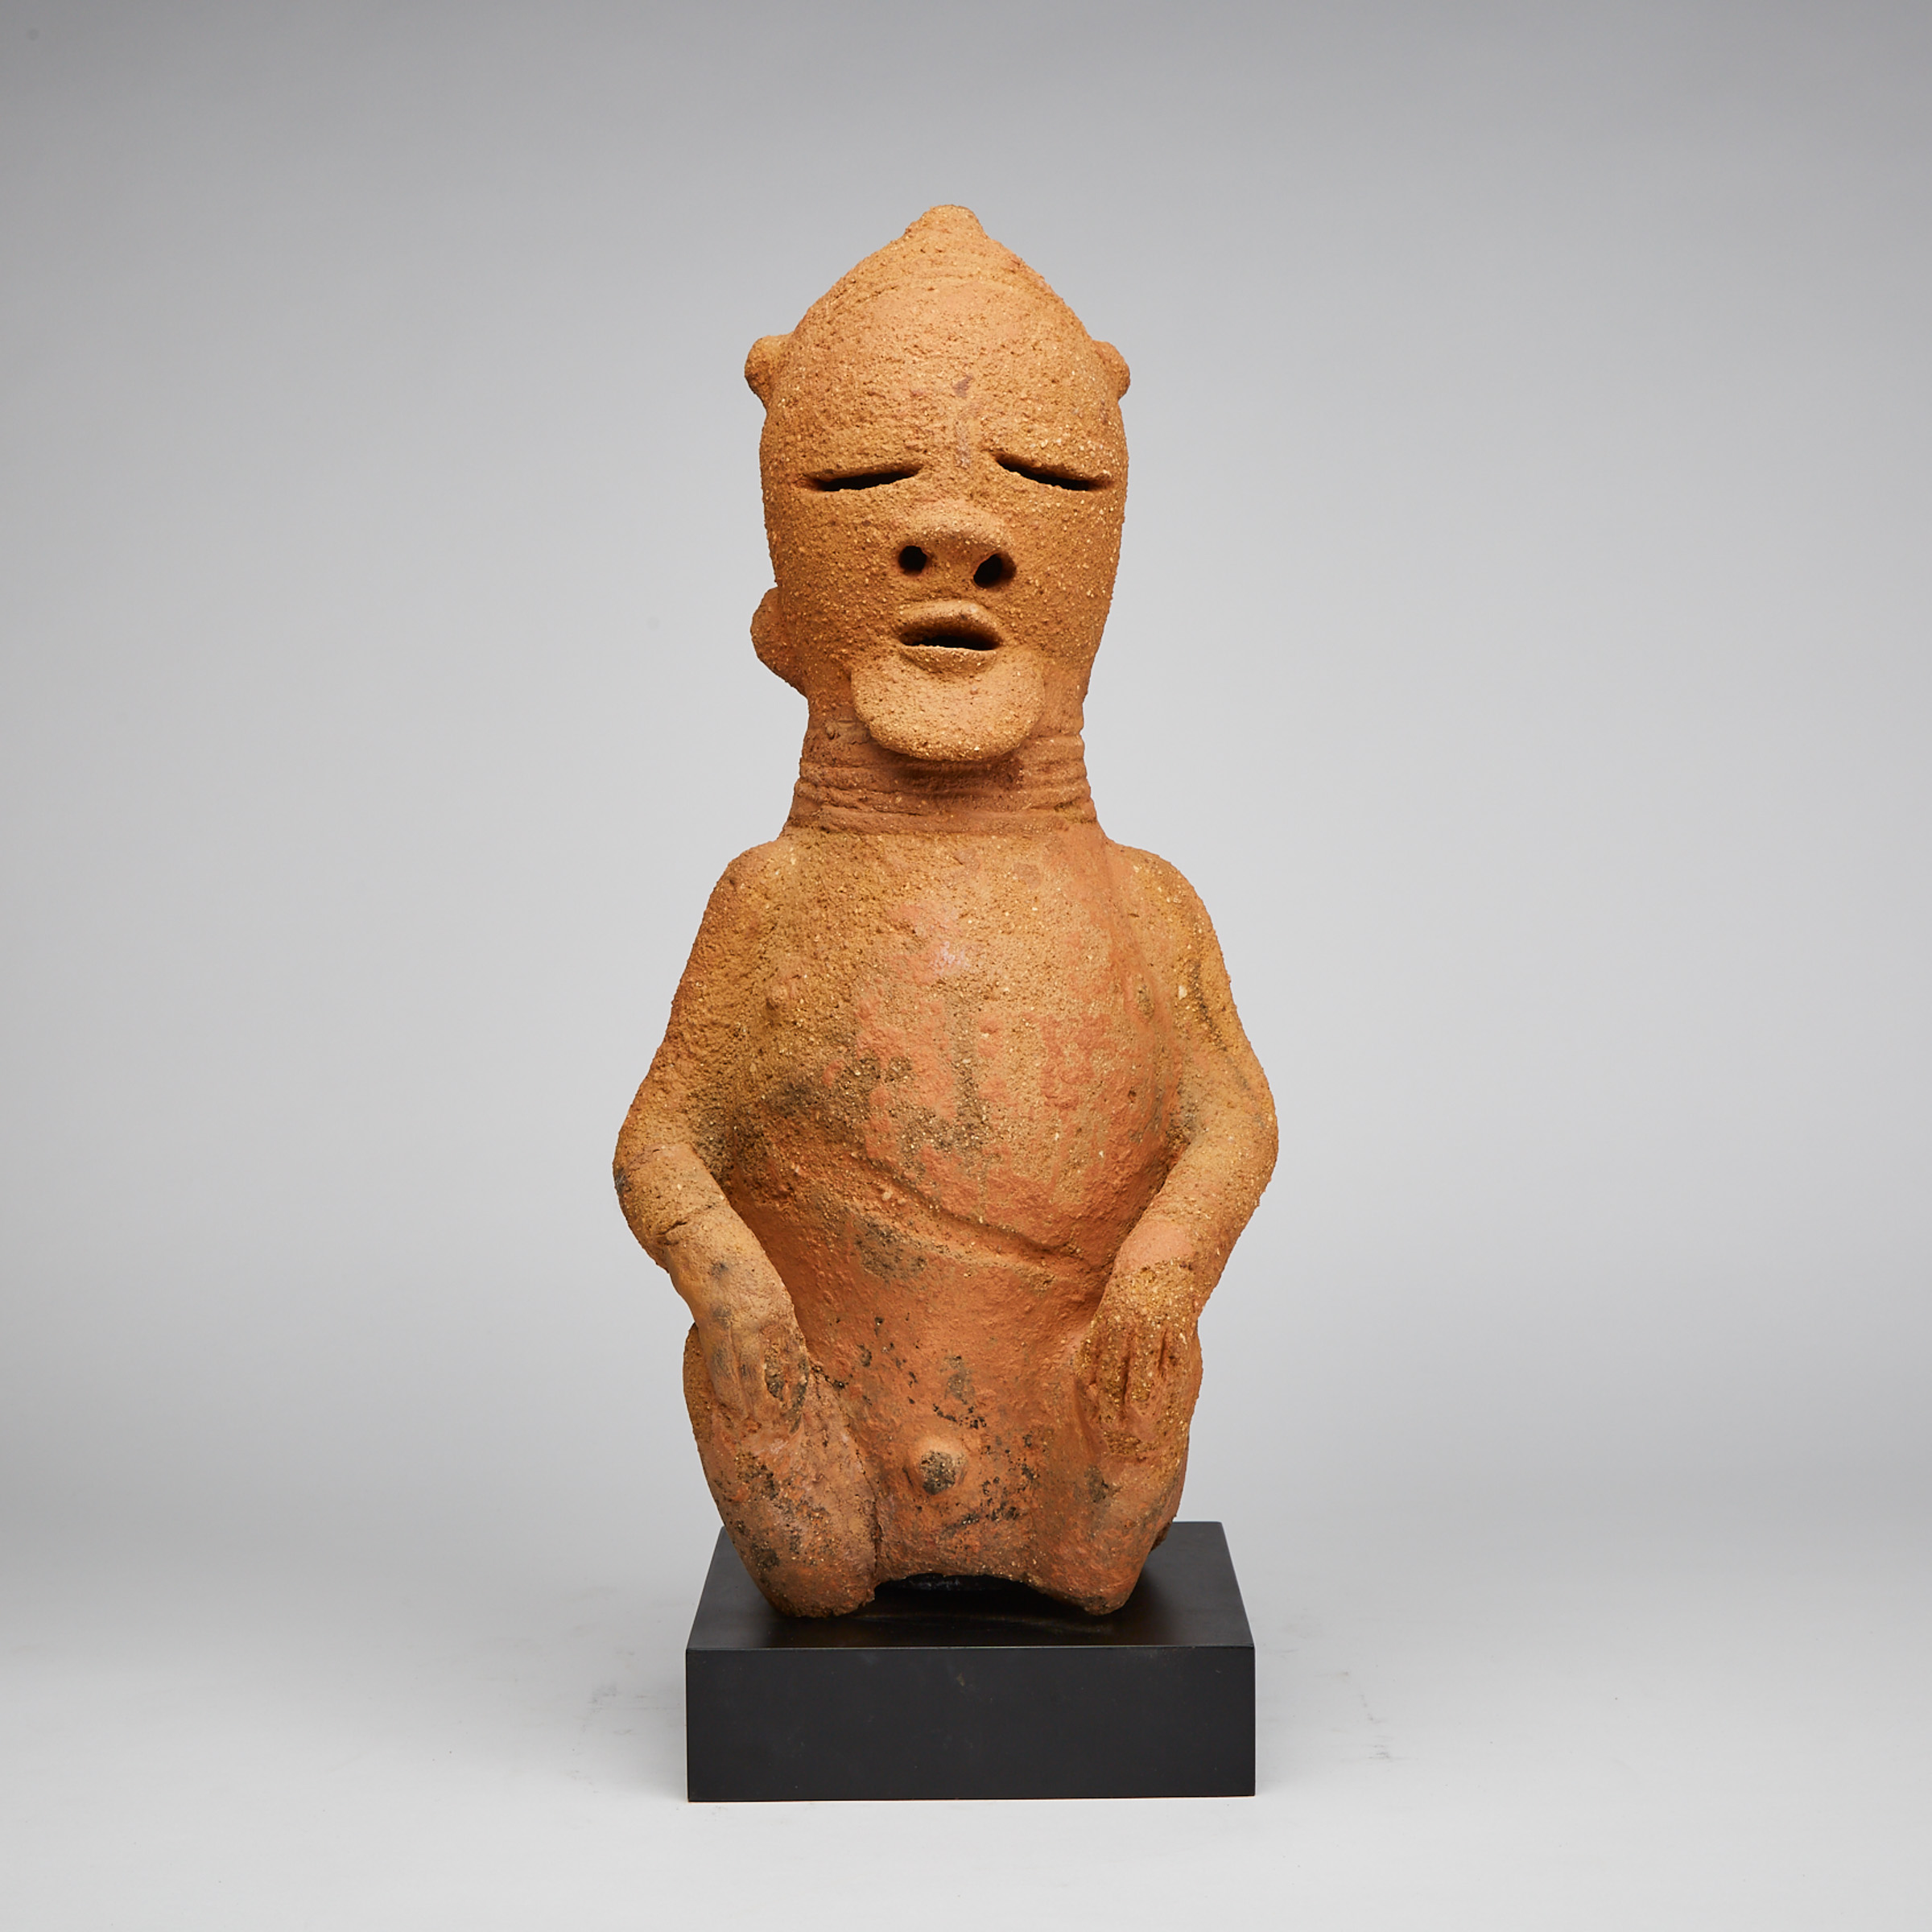 Terra Cotta Seated Figure, possibly Katsina or Sokoto, Nigeria, West Africa